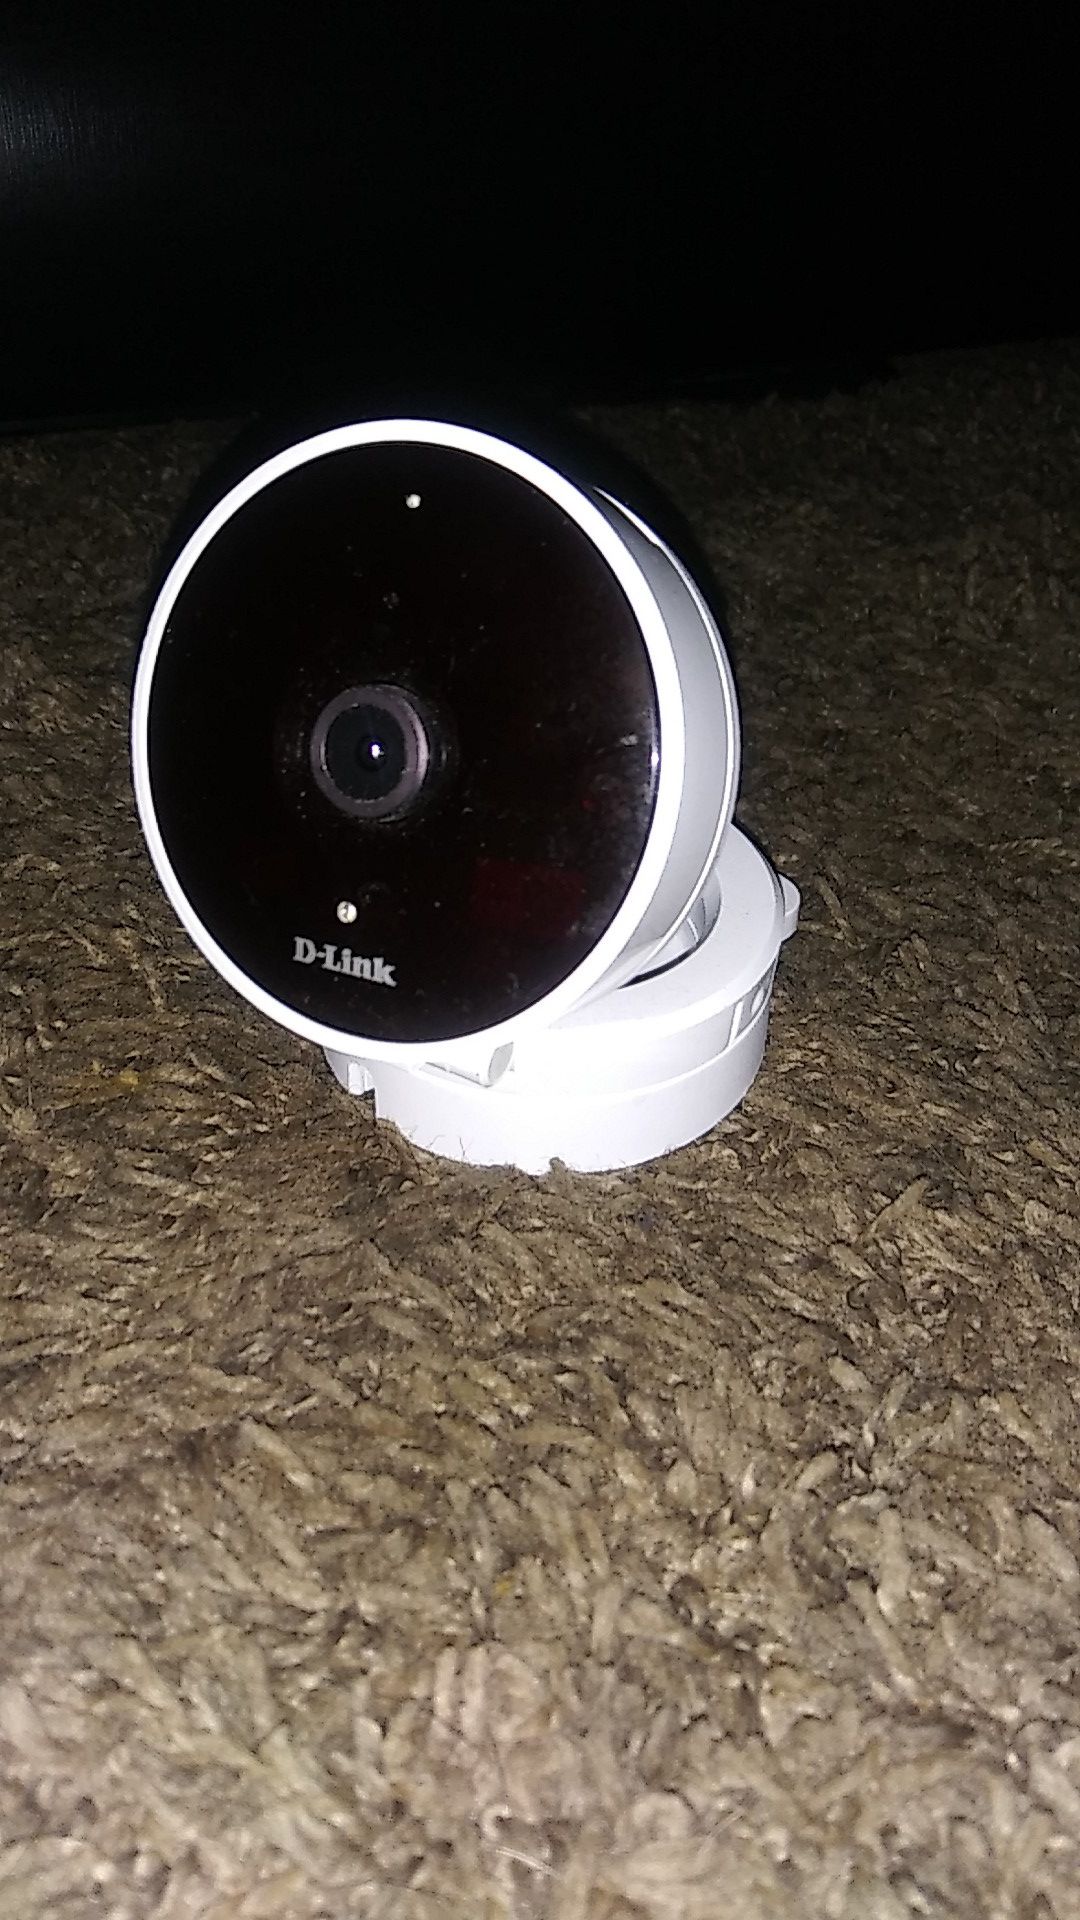 My D-Link security camera